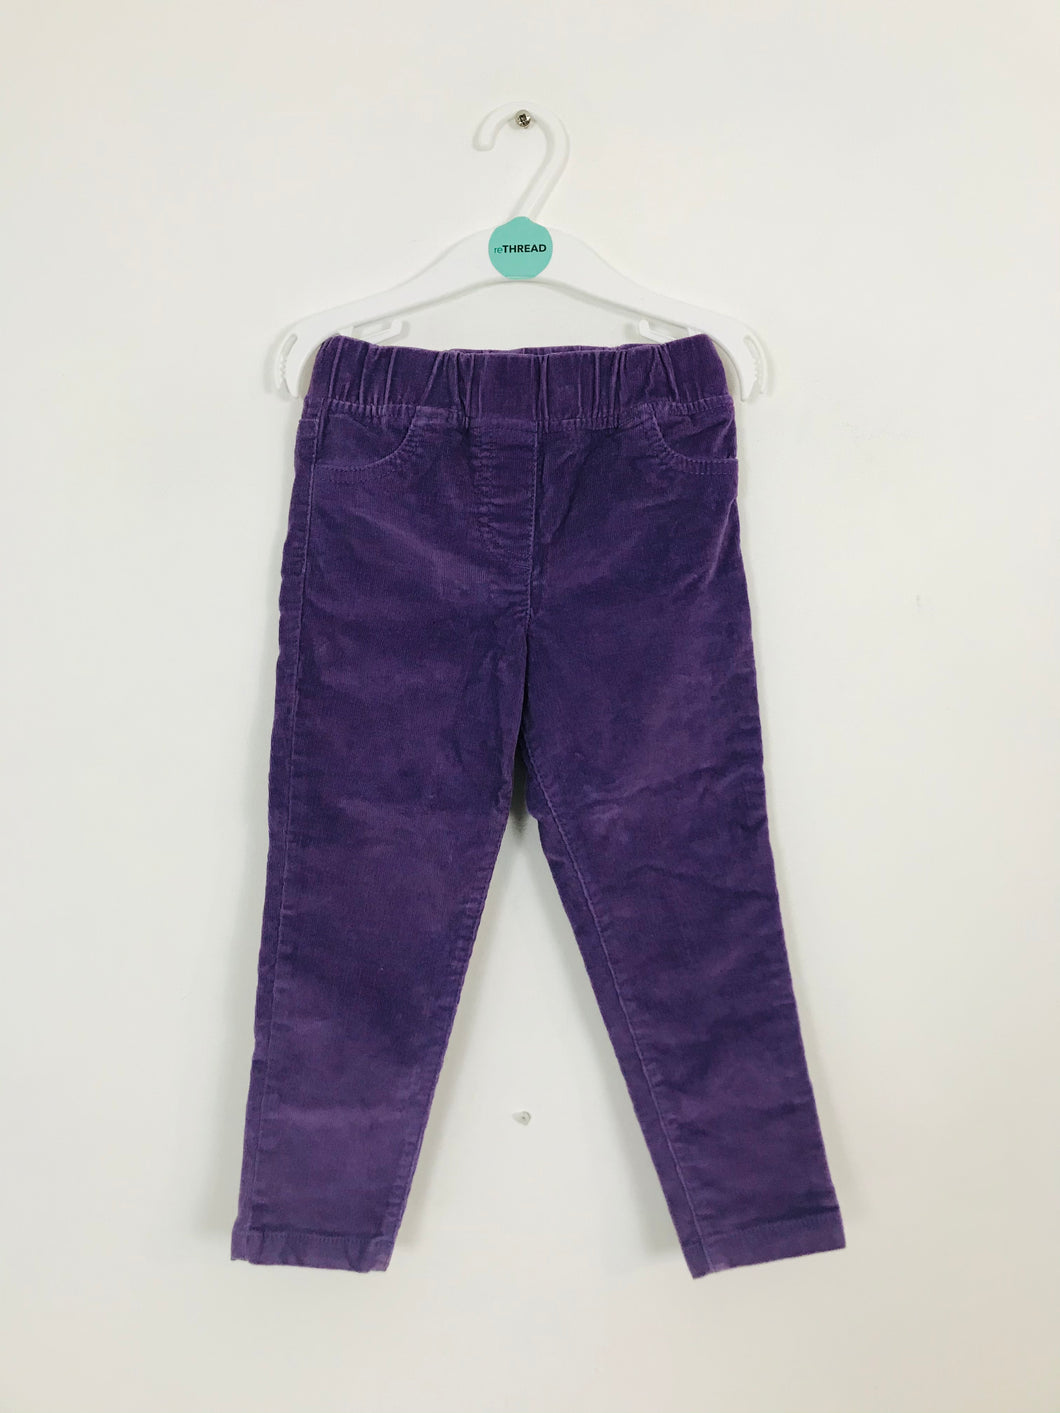 Boden Kid’s Corduroy Trousers | 3 Years | Purple